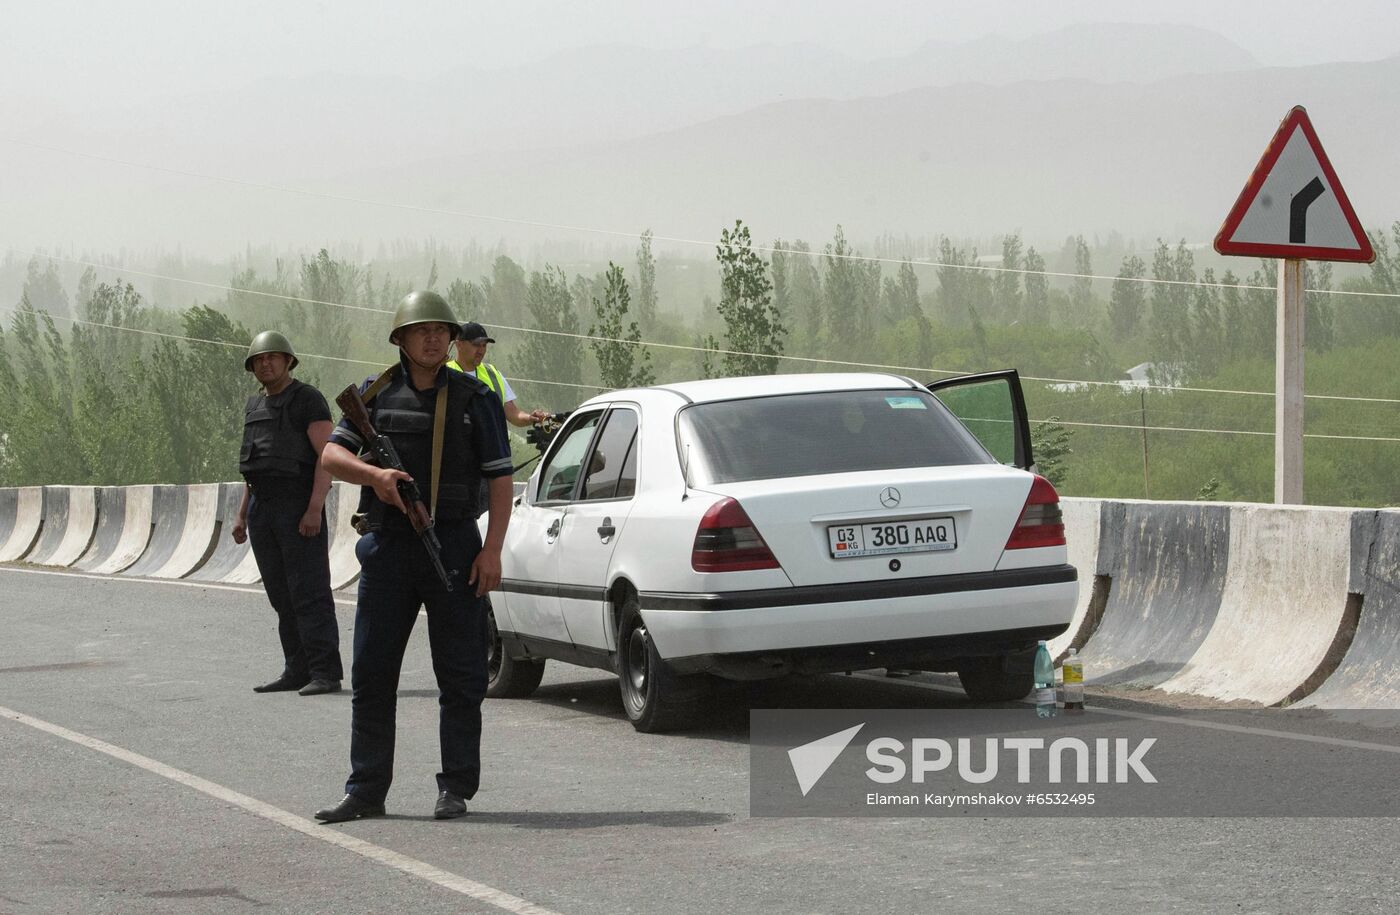 Kyrgyzstan Tajikistan Border Conflict